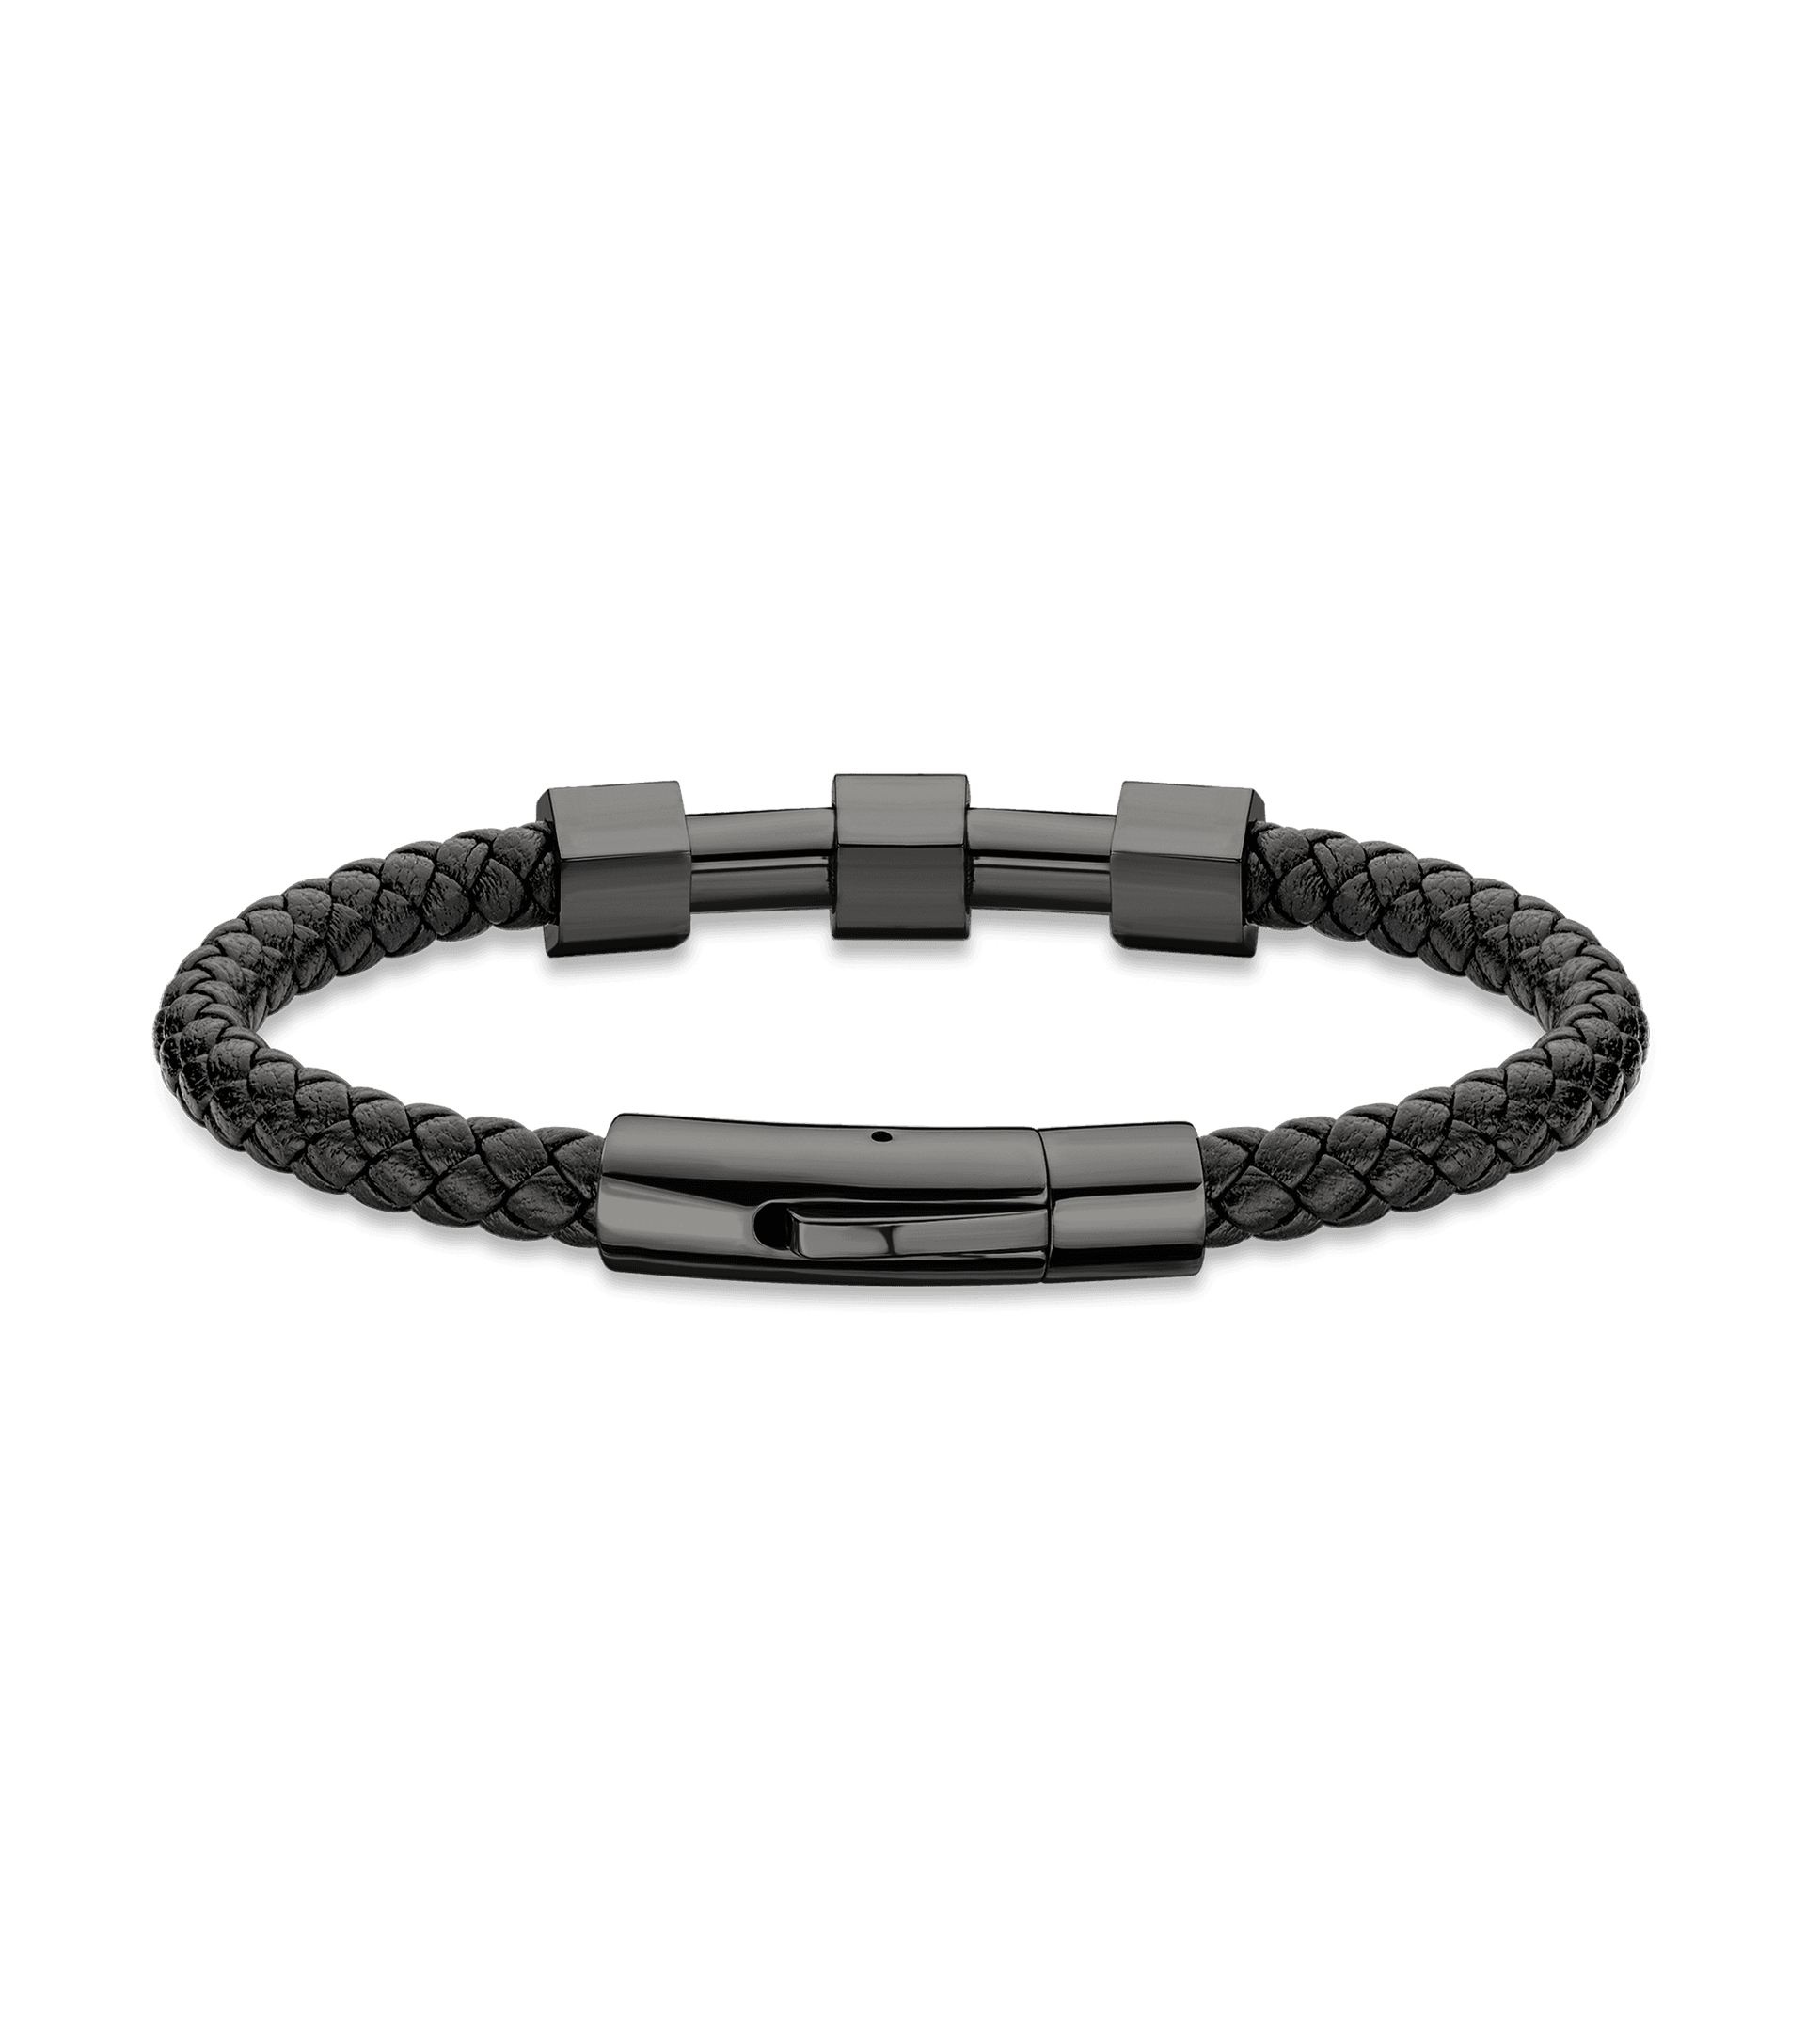 Police jewels - Gear Bracelet Police For Men PEAGB2211506 | Armbänder